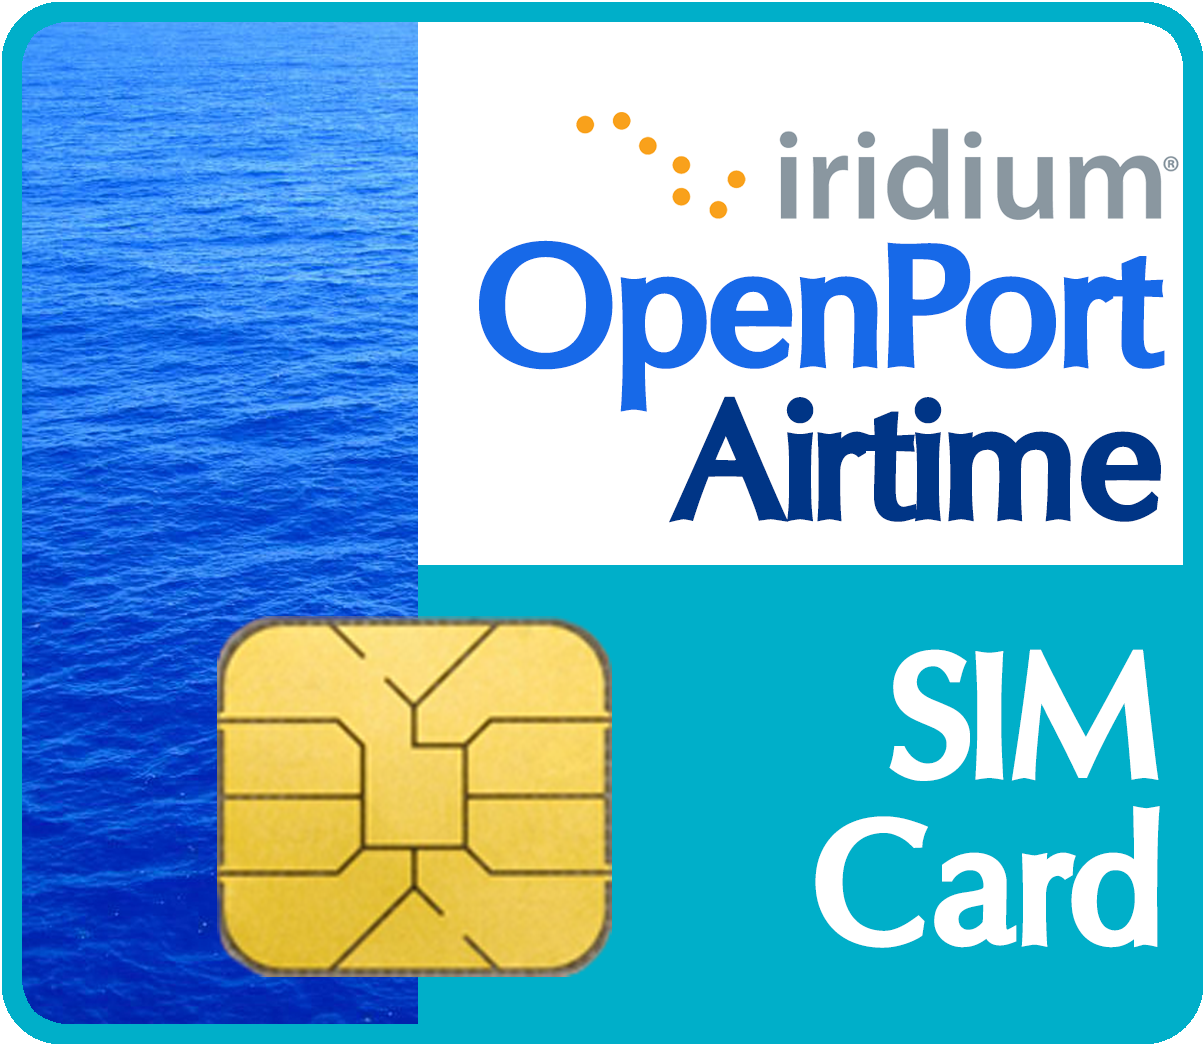 Iridium Open Port Airtime S I M Card